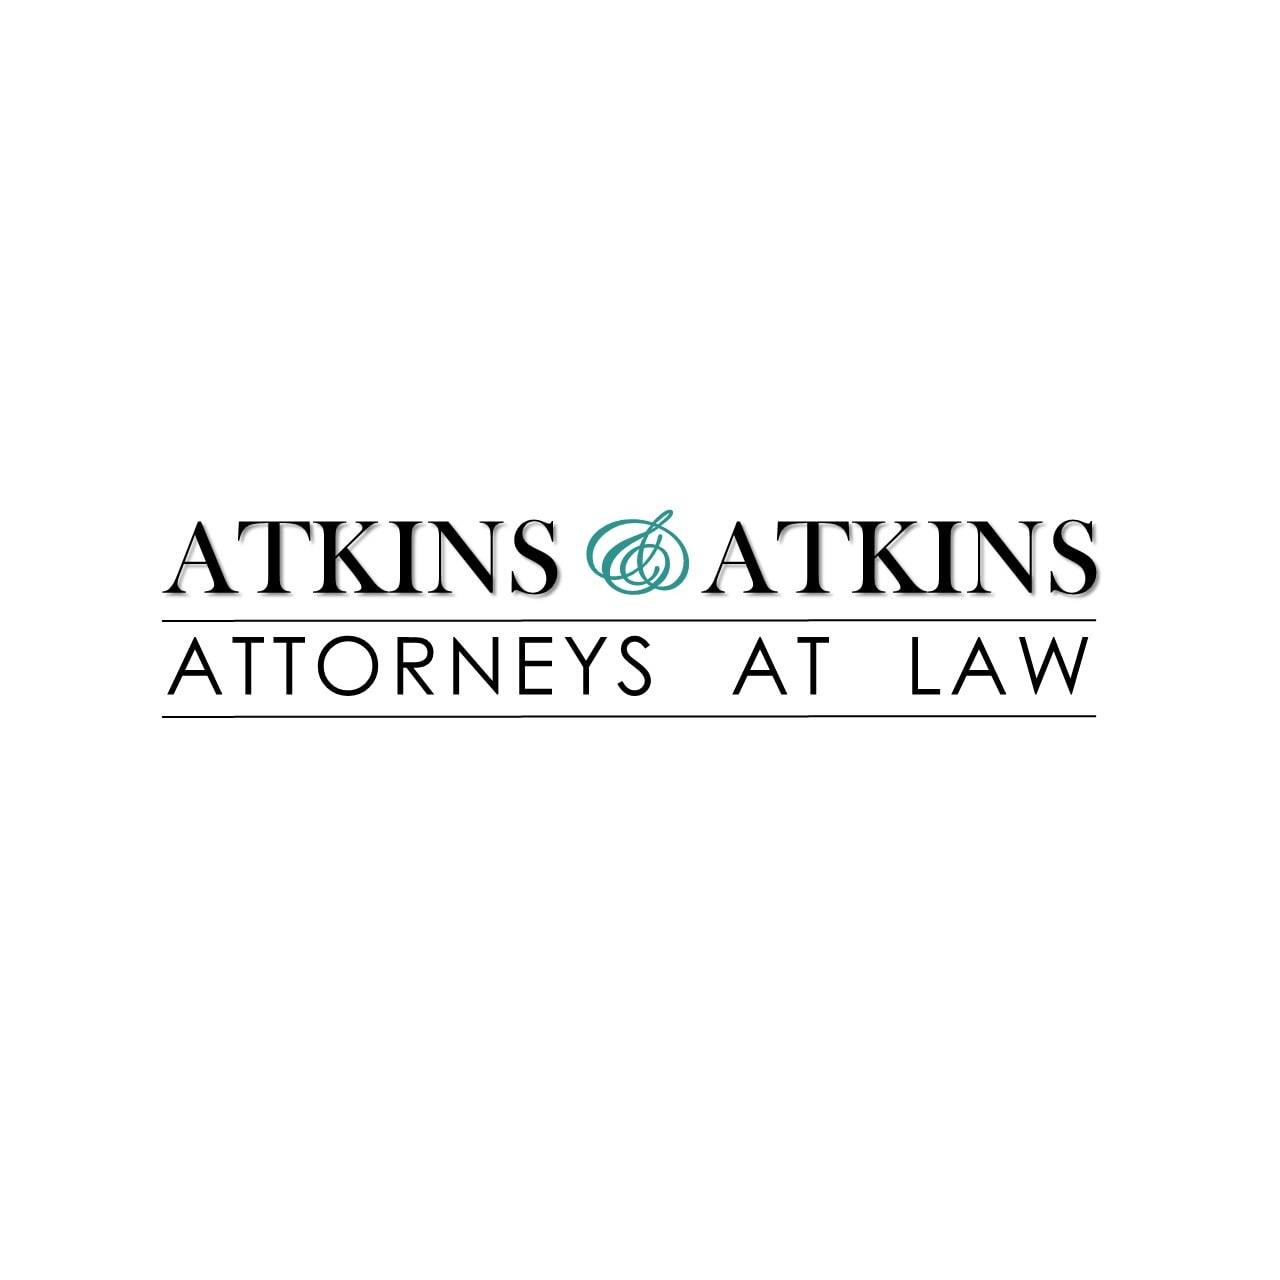 Atkins & Atkins Attorneys At law Logo